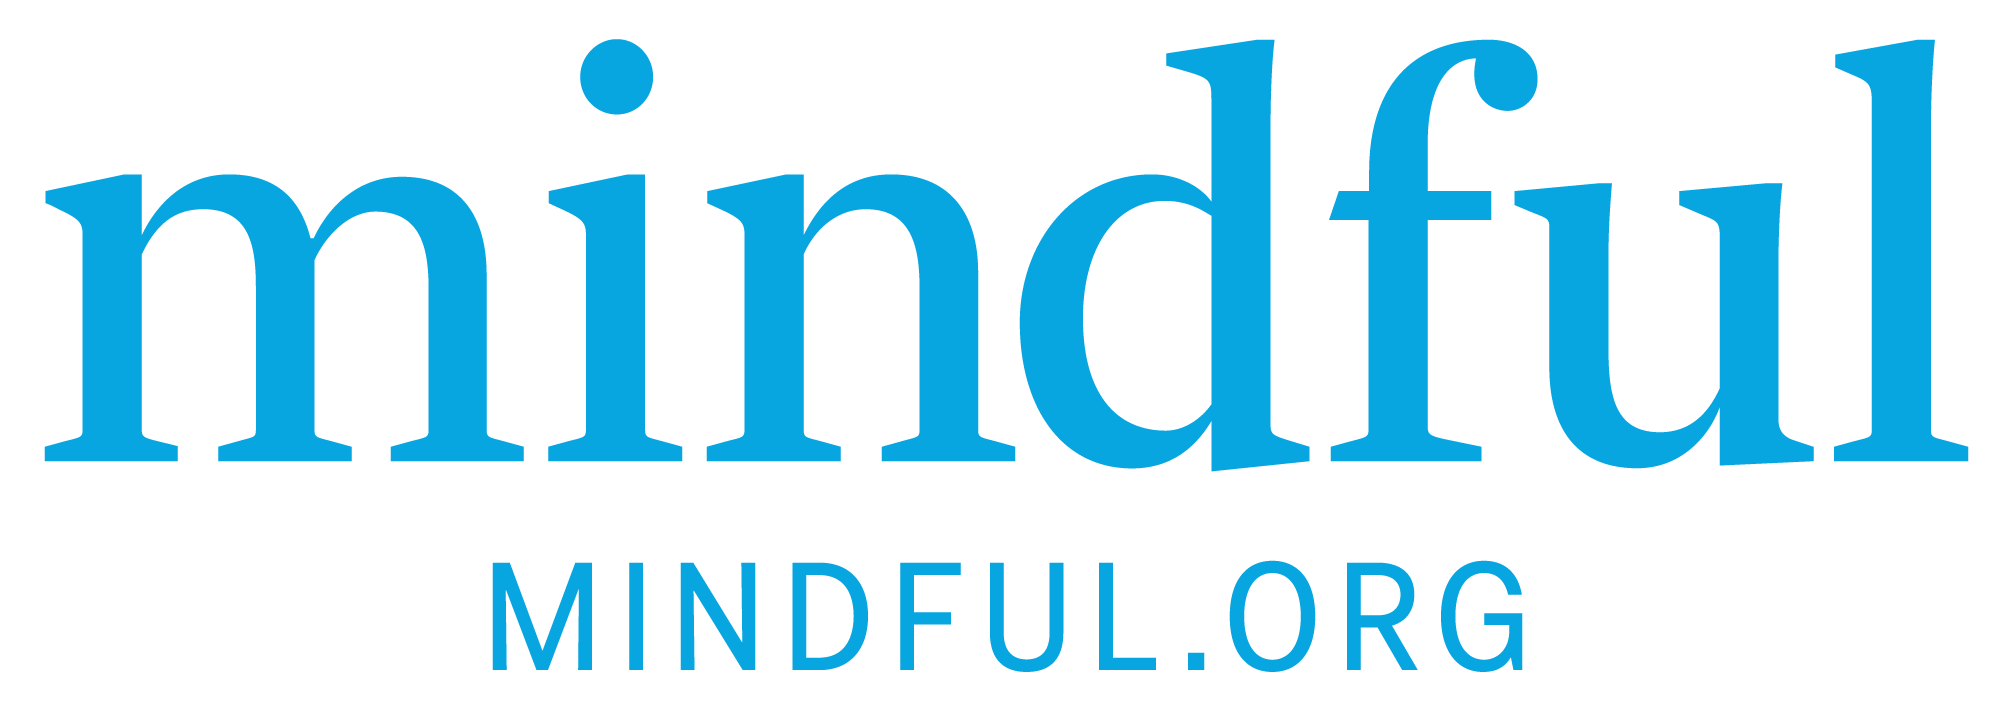 Mindful mindful.org logo